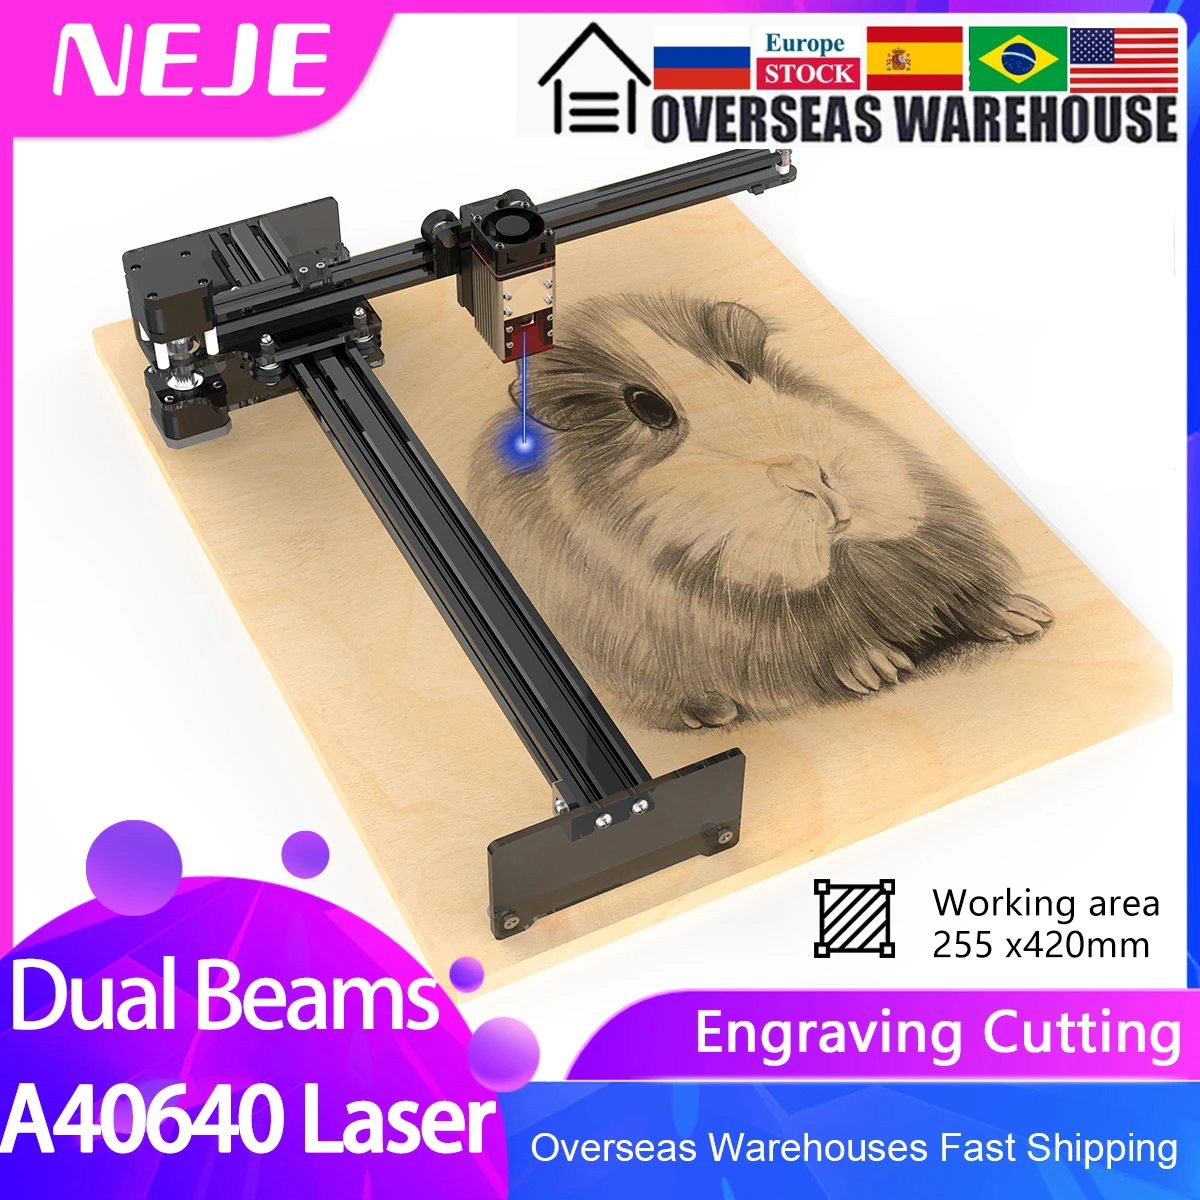 NEJE 3 Plus Laser Engraving Cutting Machine Laser Cutter CNC Router Laser Engraver Metal Bluetooth Wireless Control Offline Work